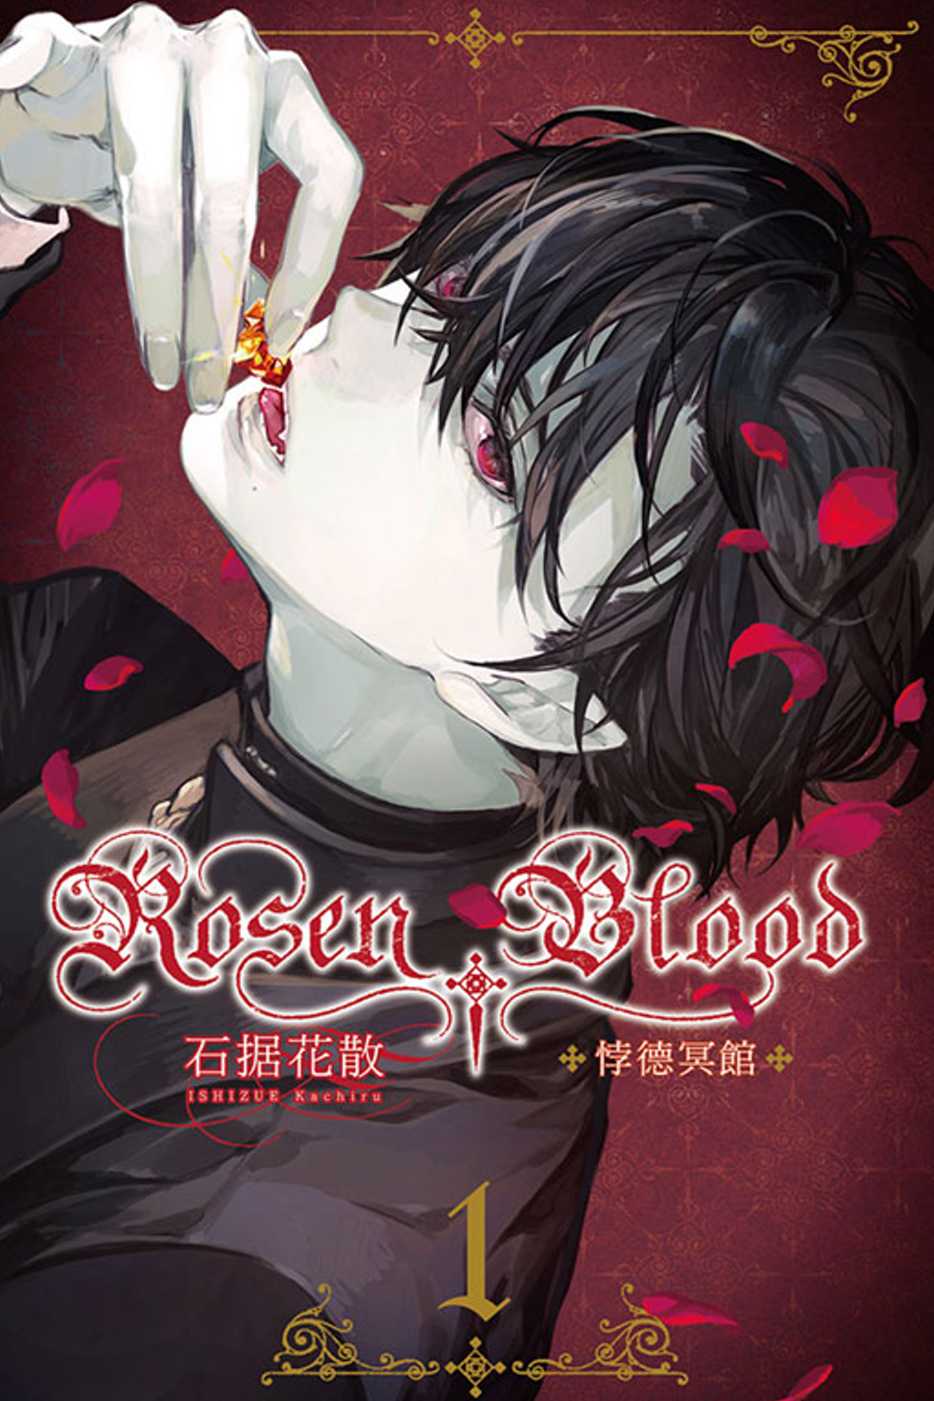 Rosen Blood ―悖德冥館 1